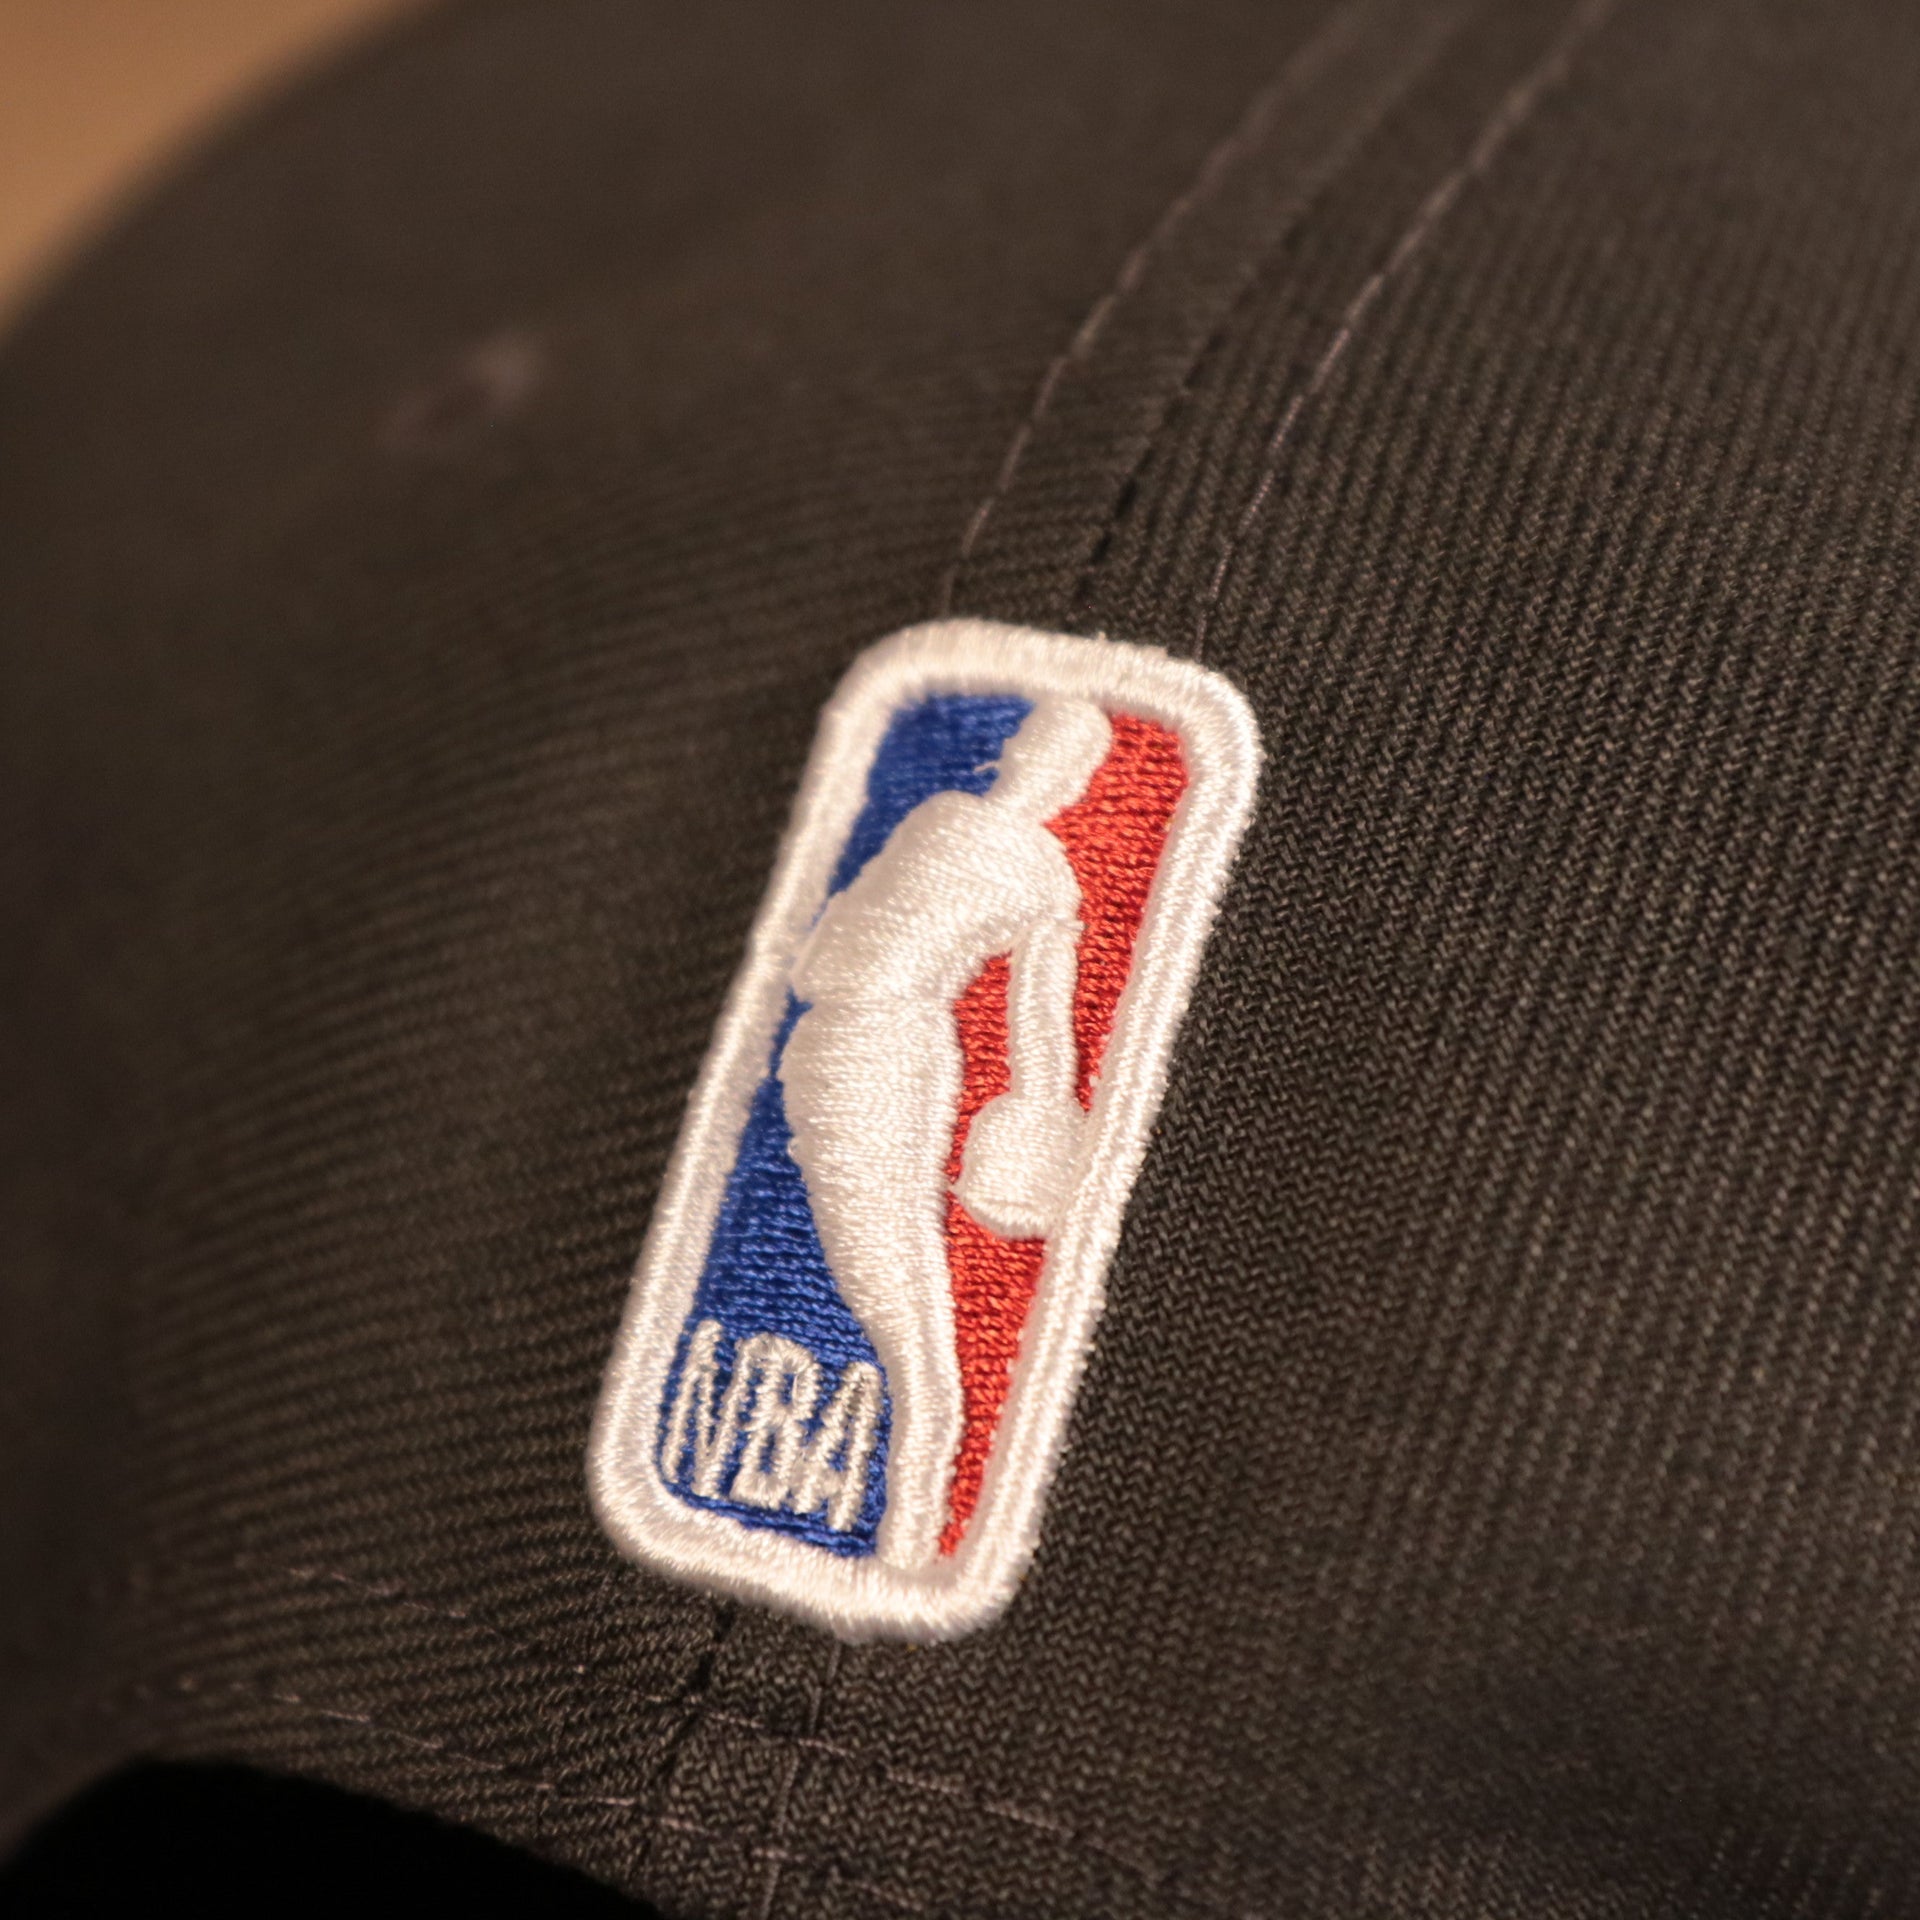 A close up of the NBA logo embroidered on the 2021 Milwaukee Bucks NBA Champions snapback aht